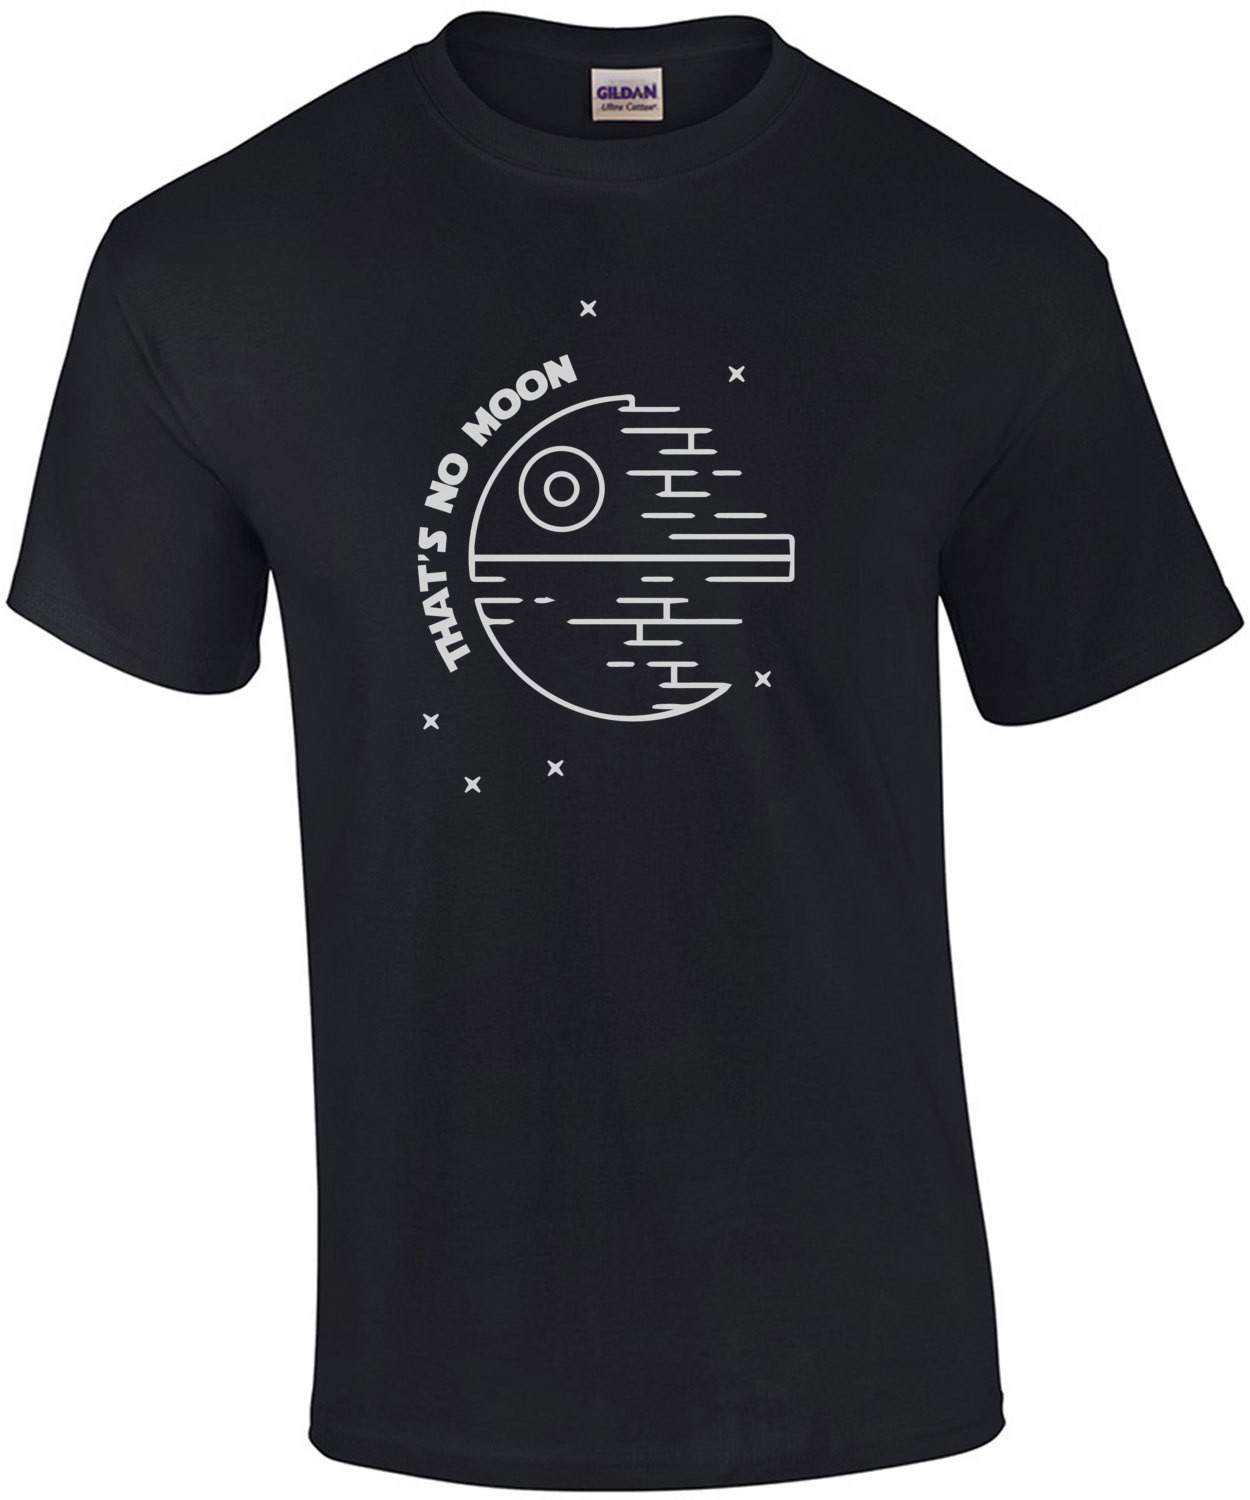 That's no moon - Star Wars T-Shirt